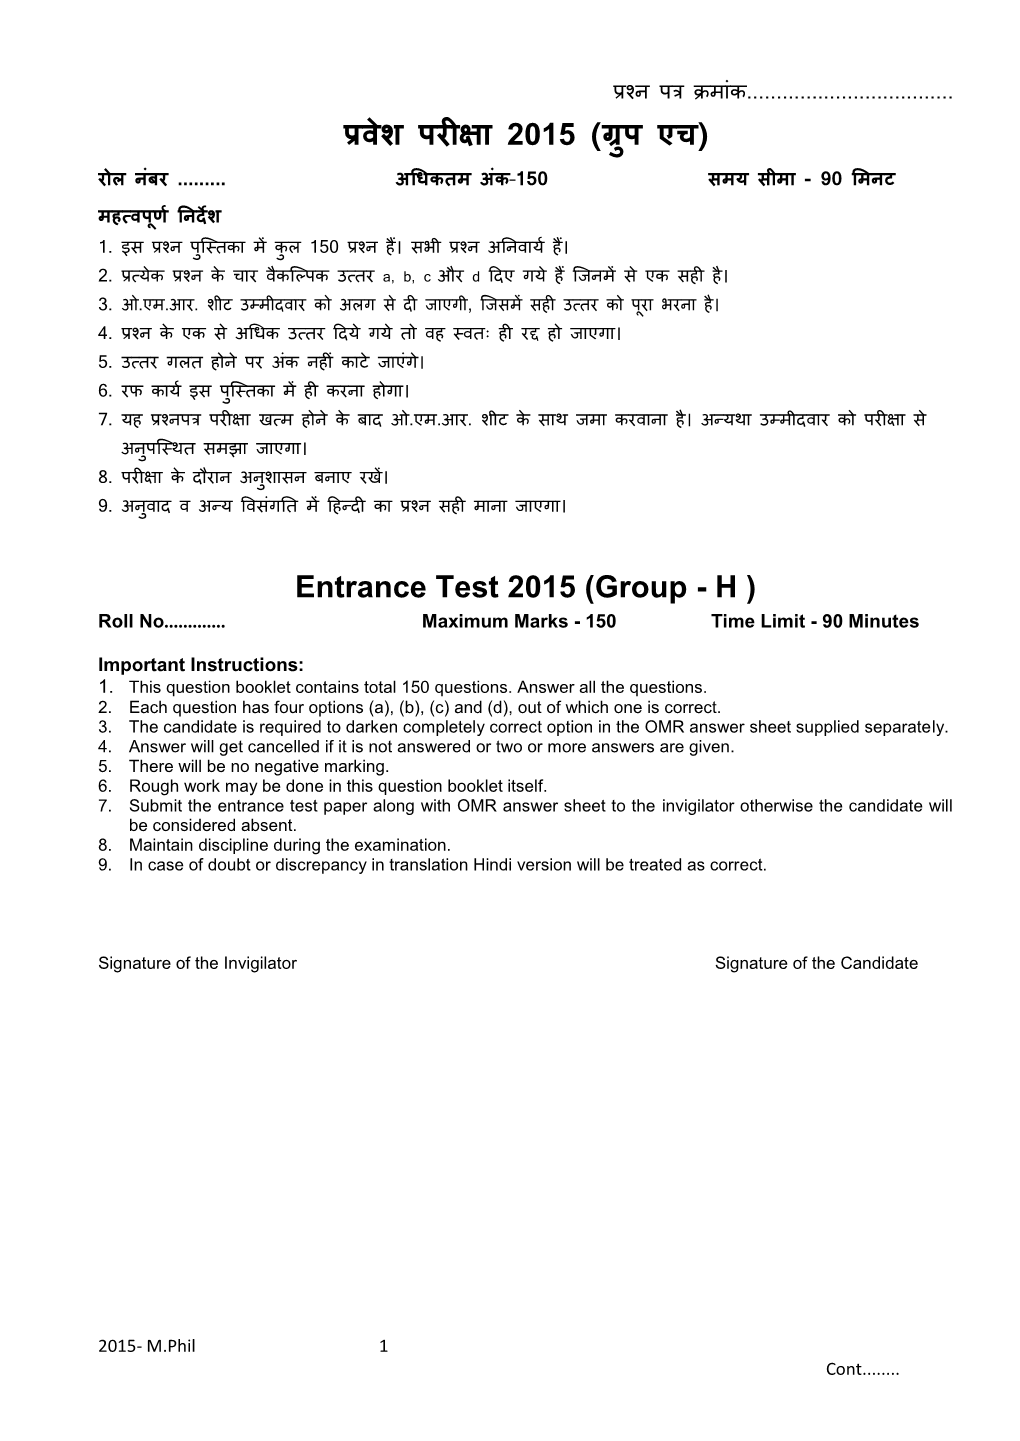 प्रवेश परीऺा 2015 (ग्रुप एच) Entrance Test 2015 (Group